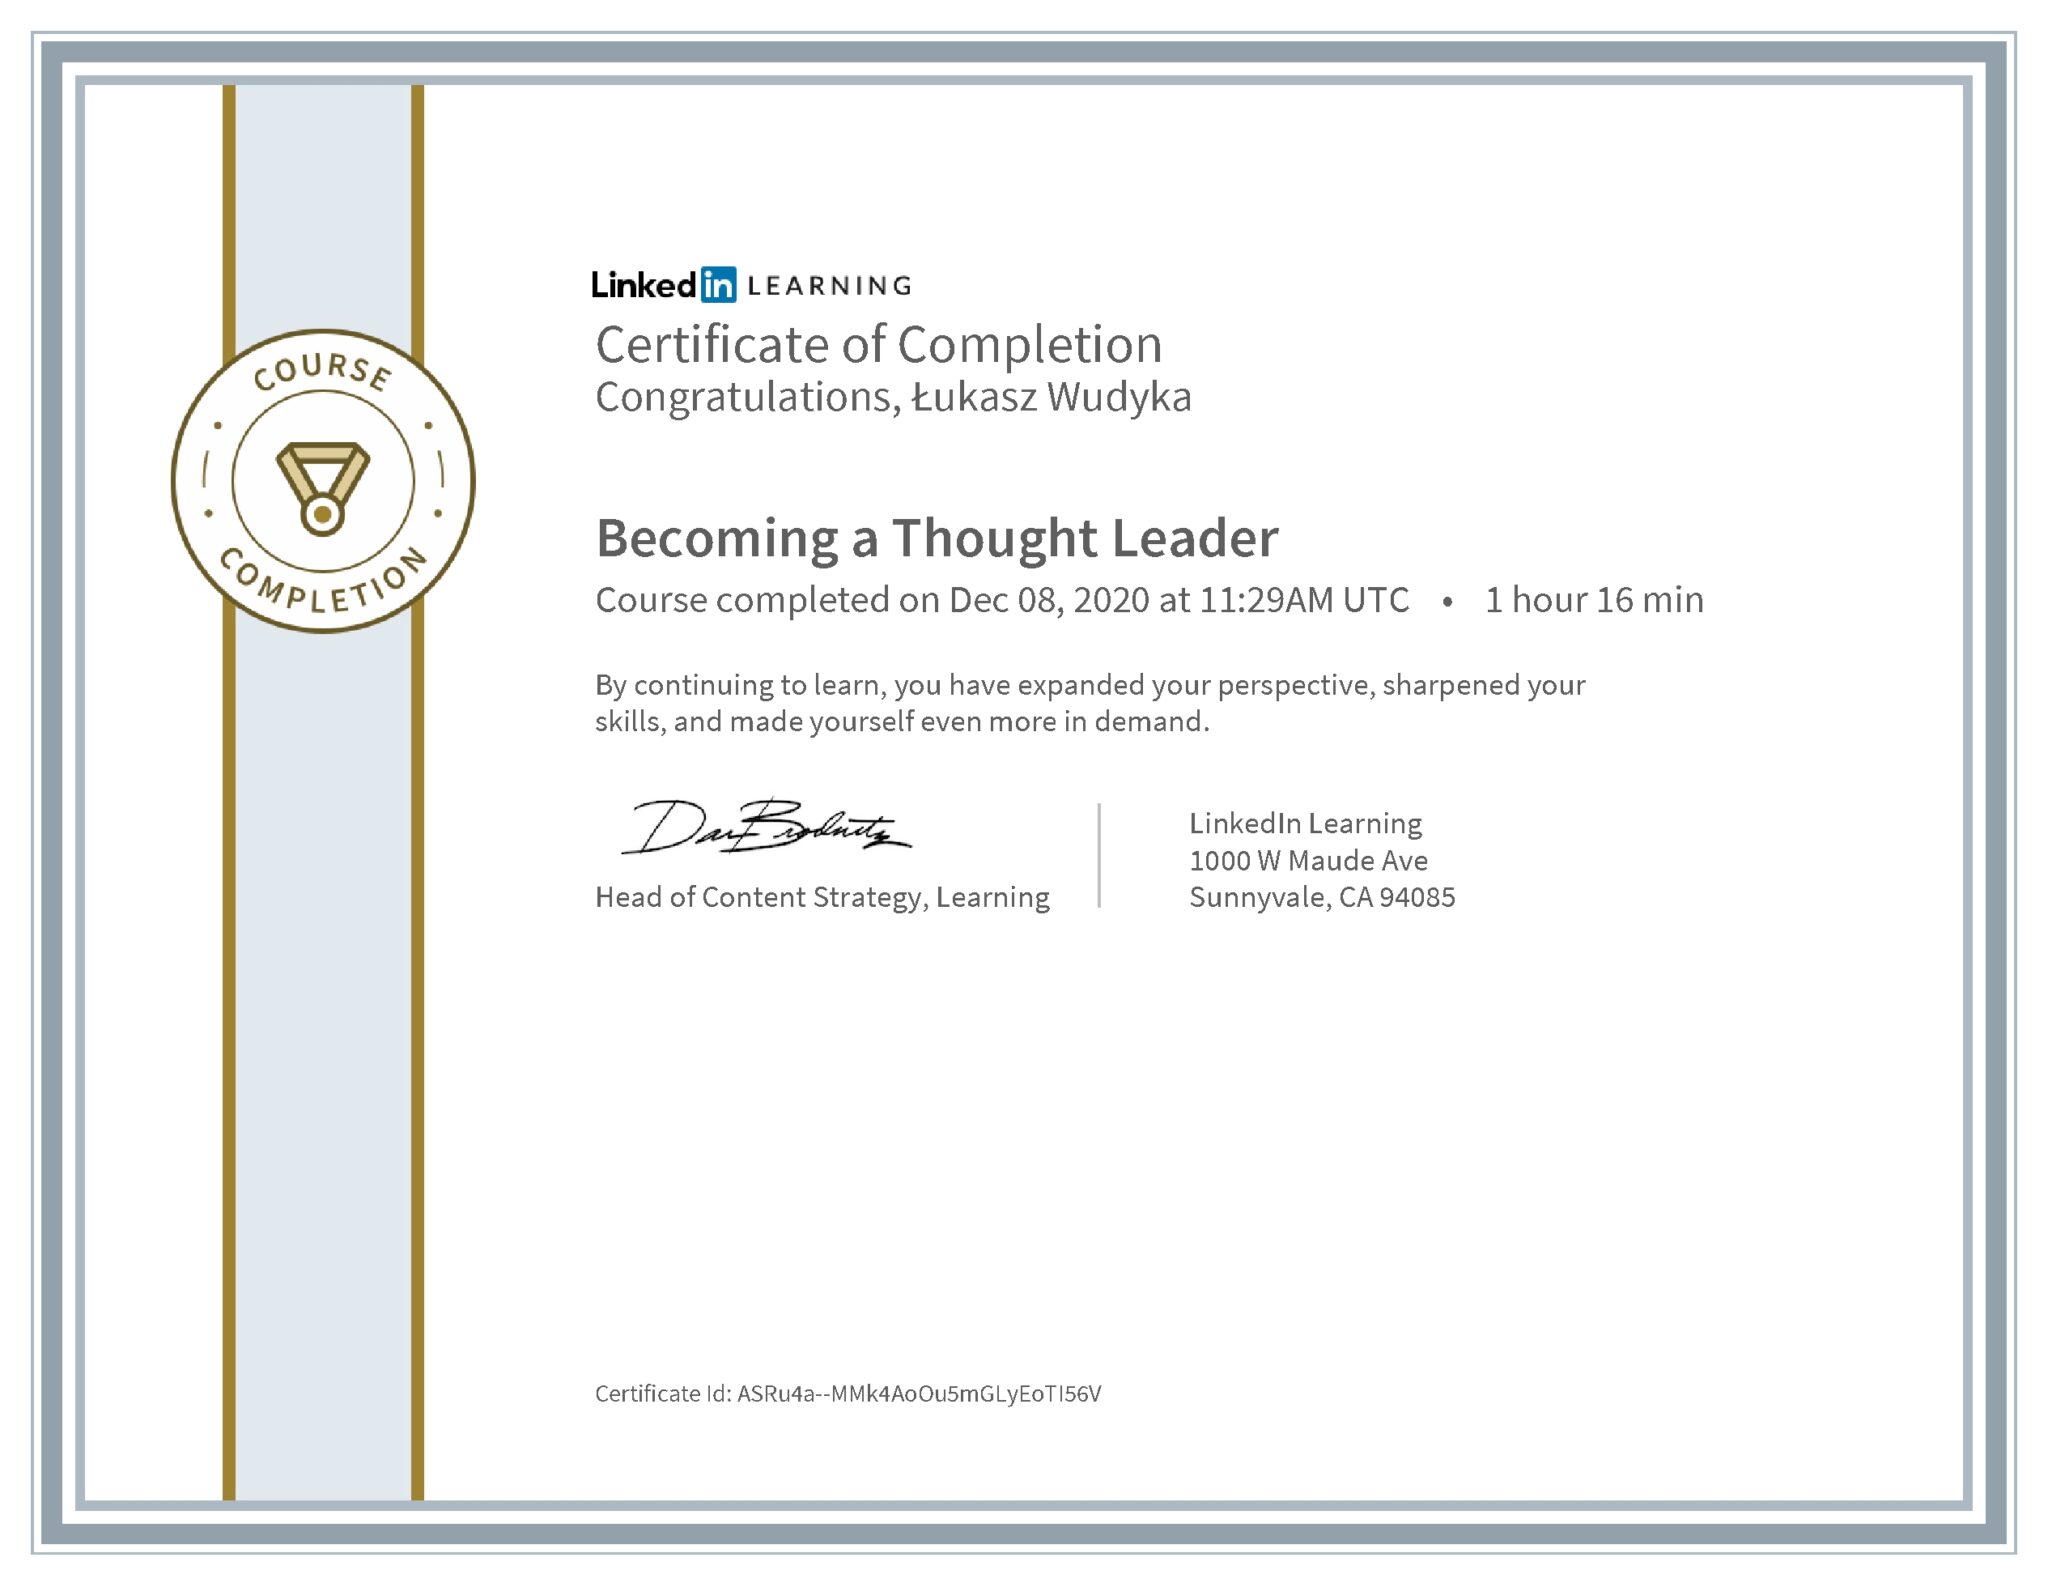 Łukasz Wudyka certyfikat LinkedIn Becoming a Thought Leader